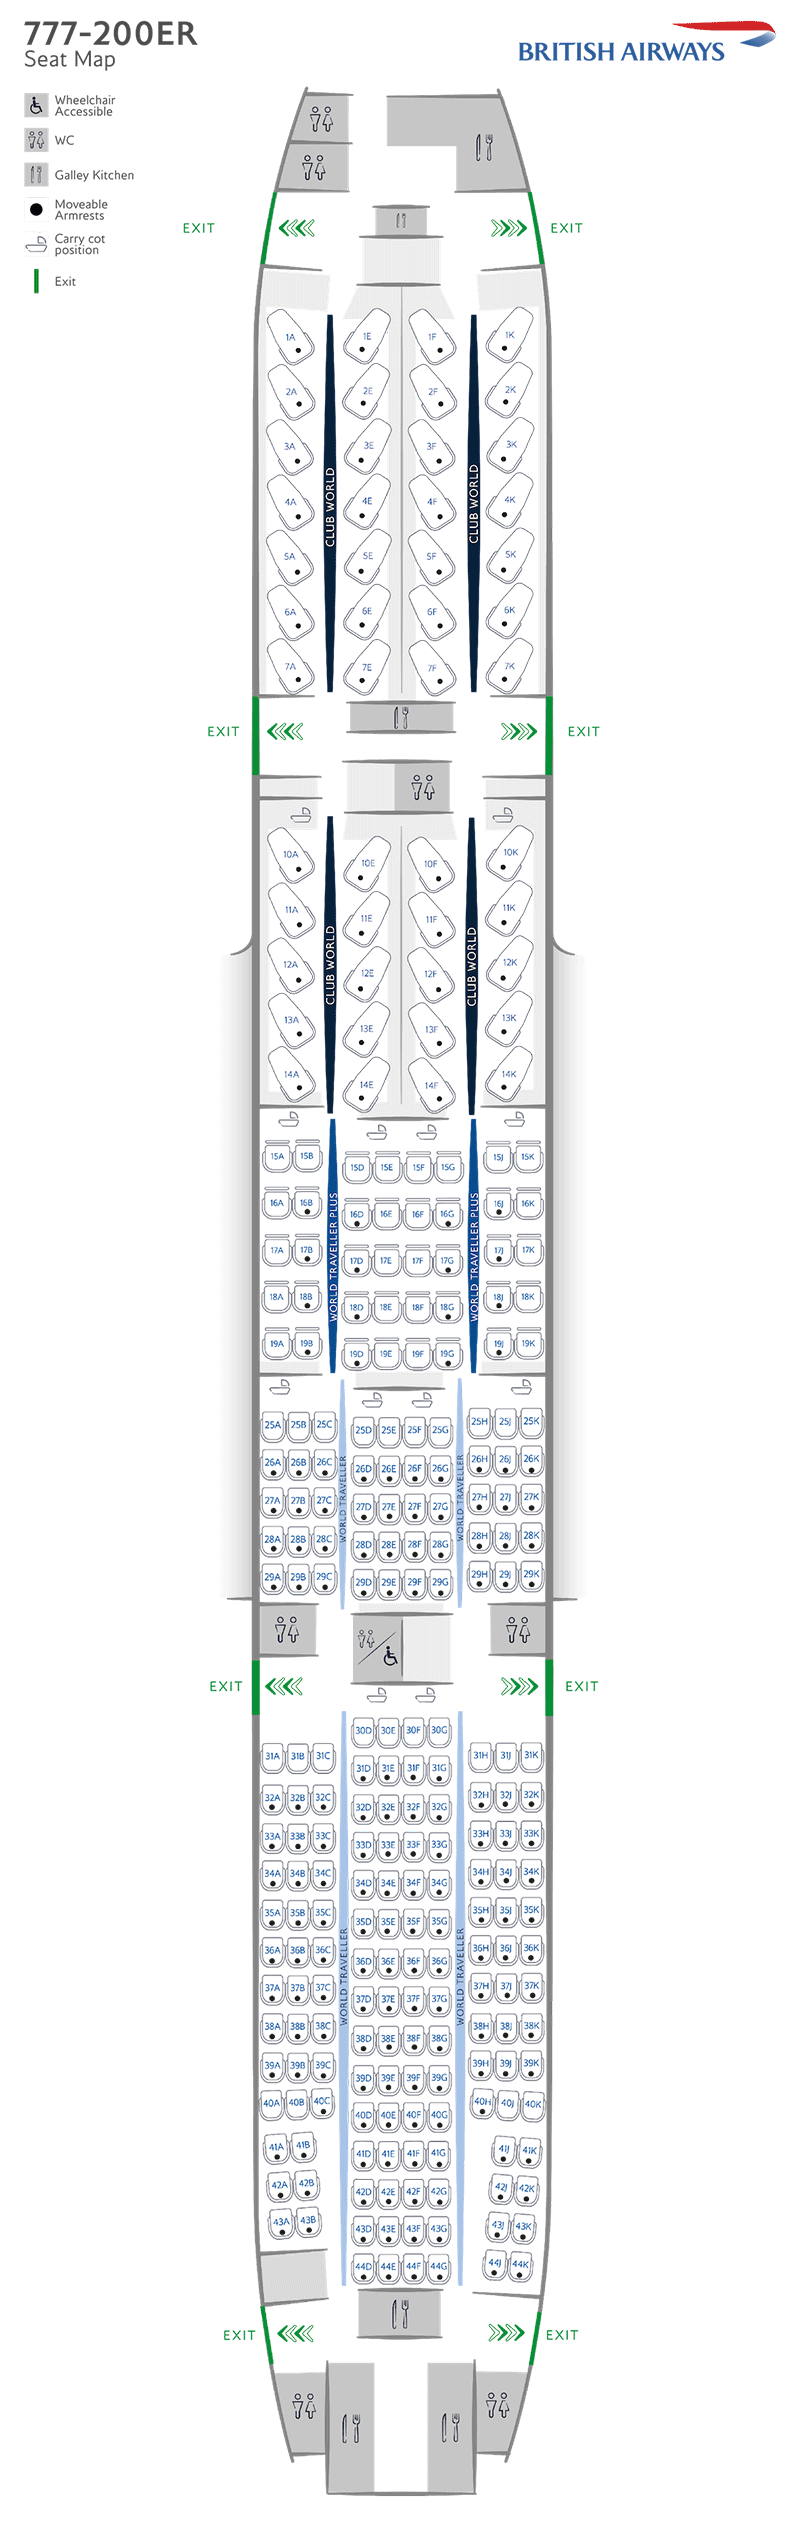 B777-200ER seatmap